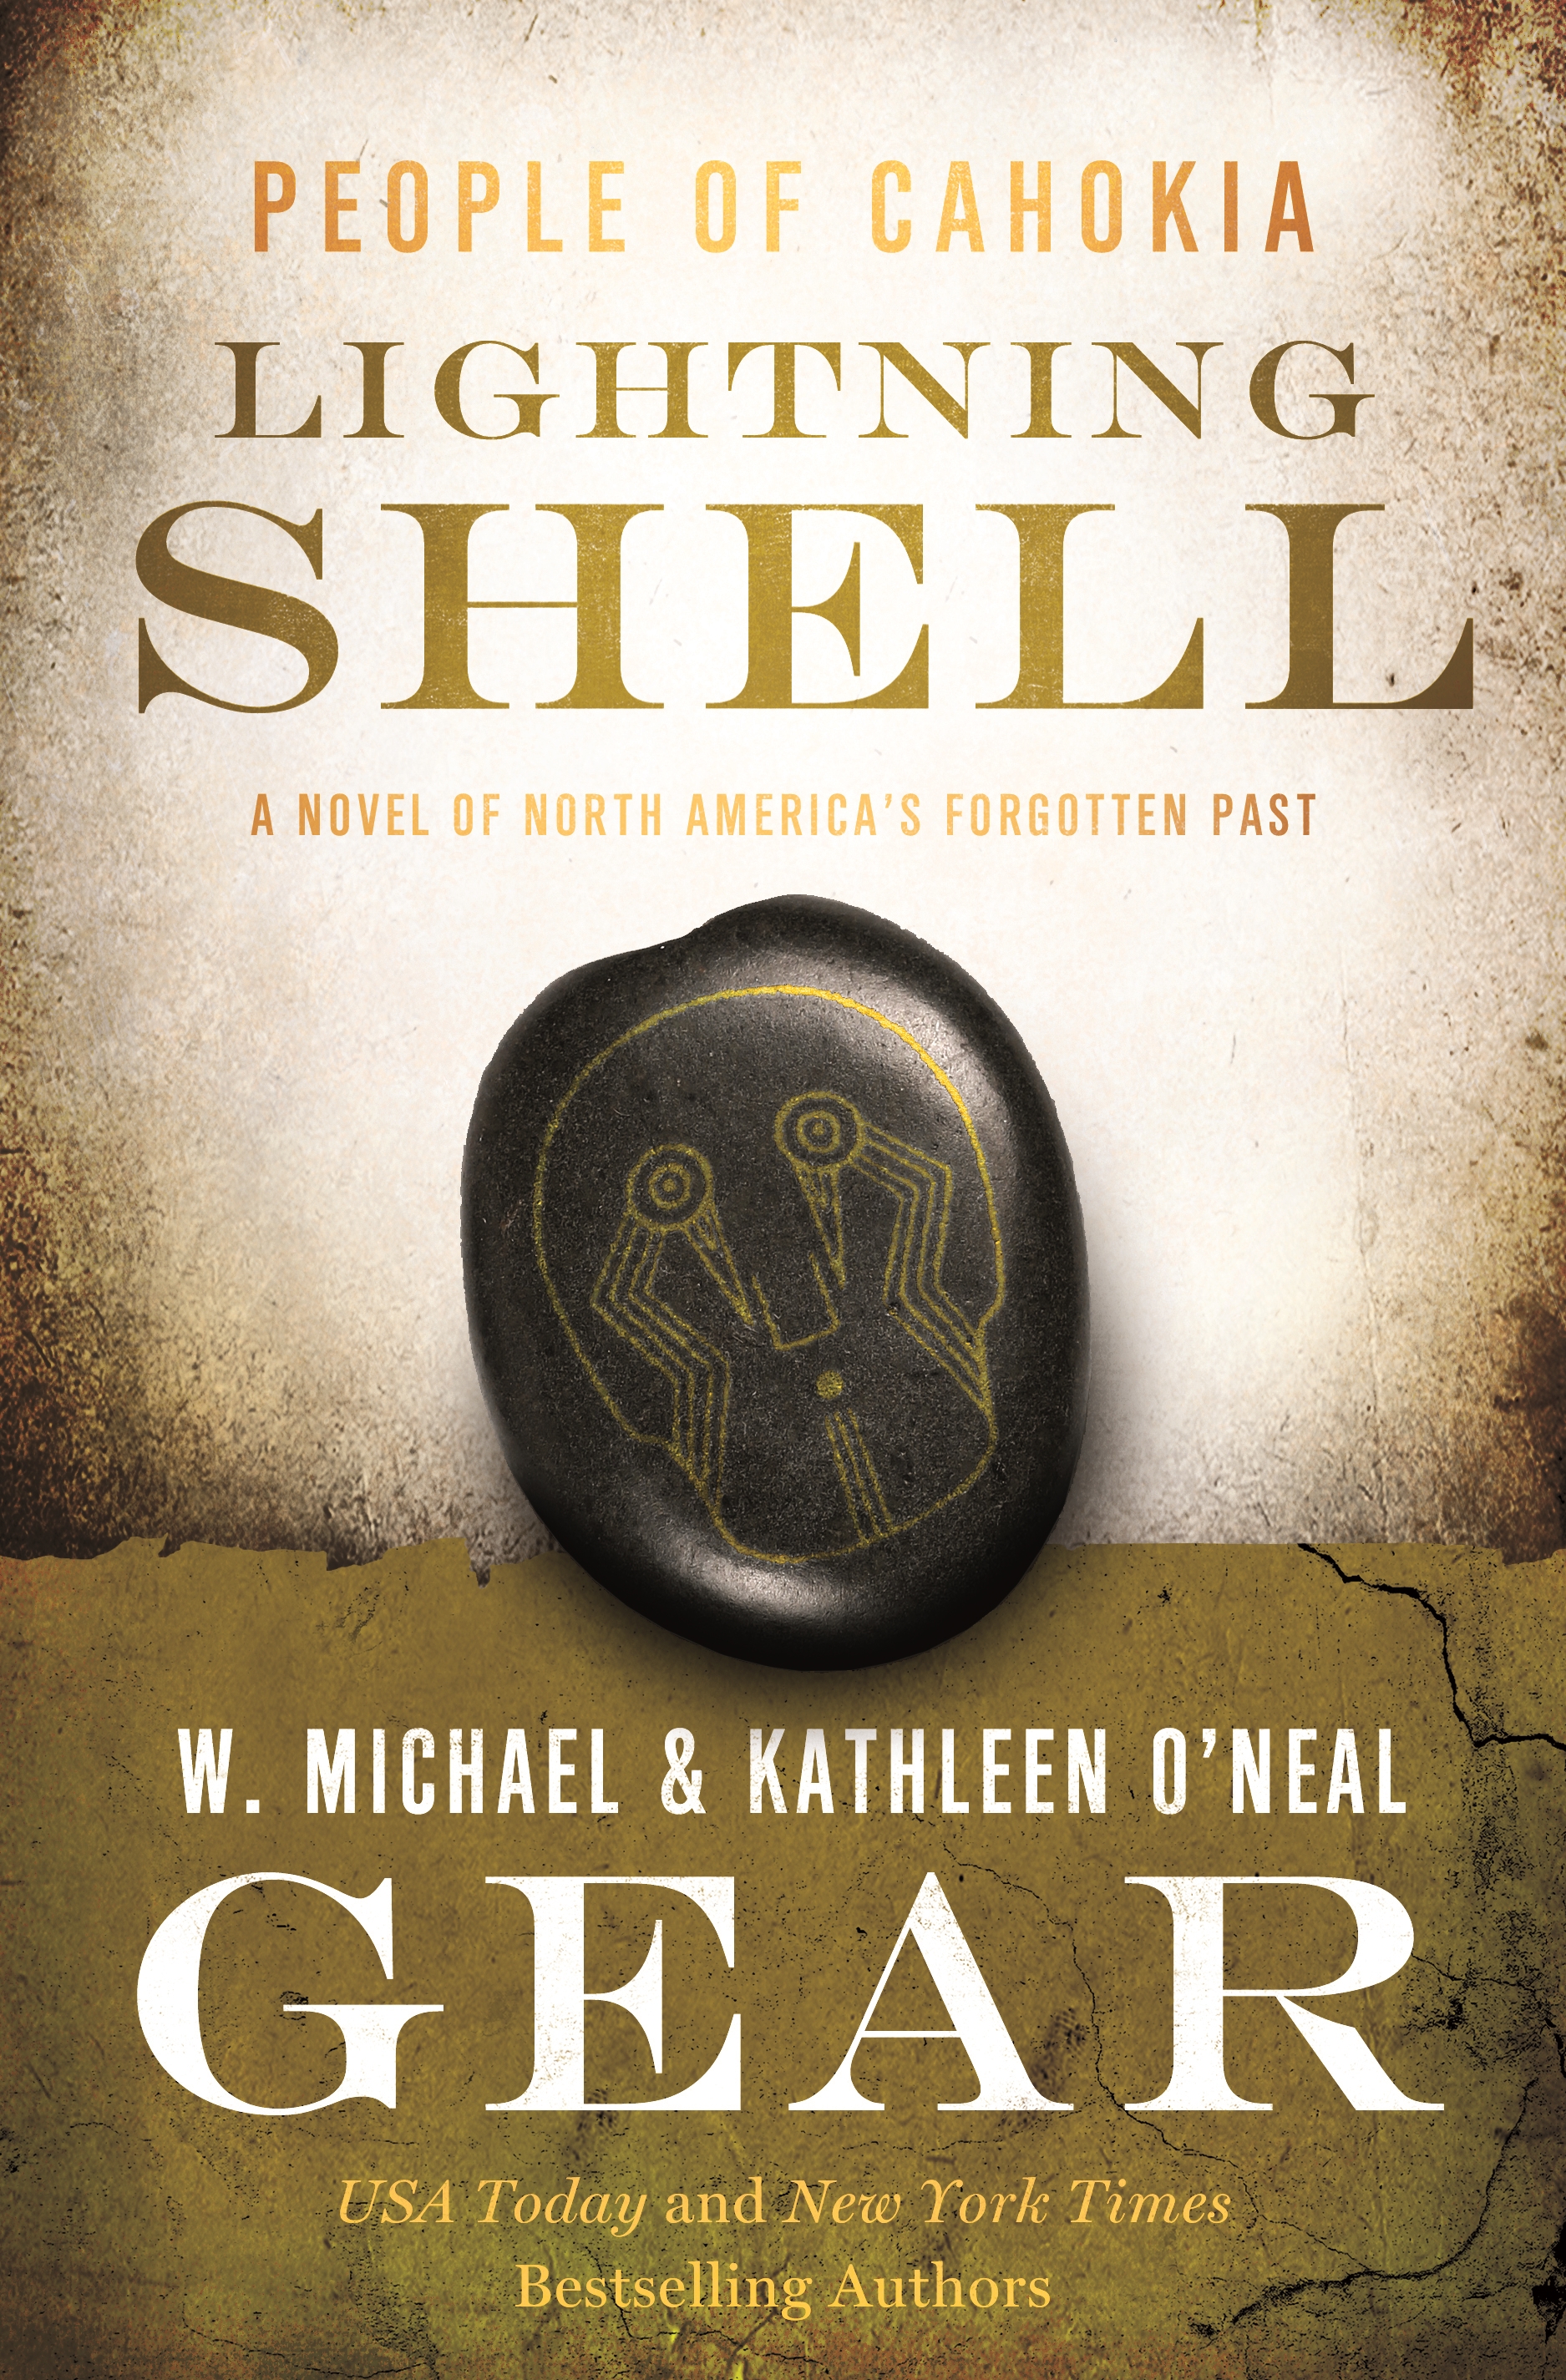 Lightning Shell : A People of Cahokia Novel by W. Michael Gear, Kathleen O'Neal Gear